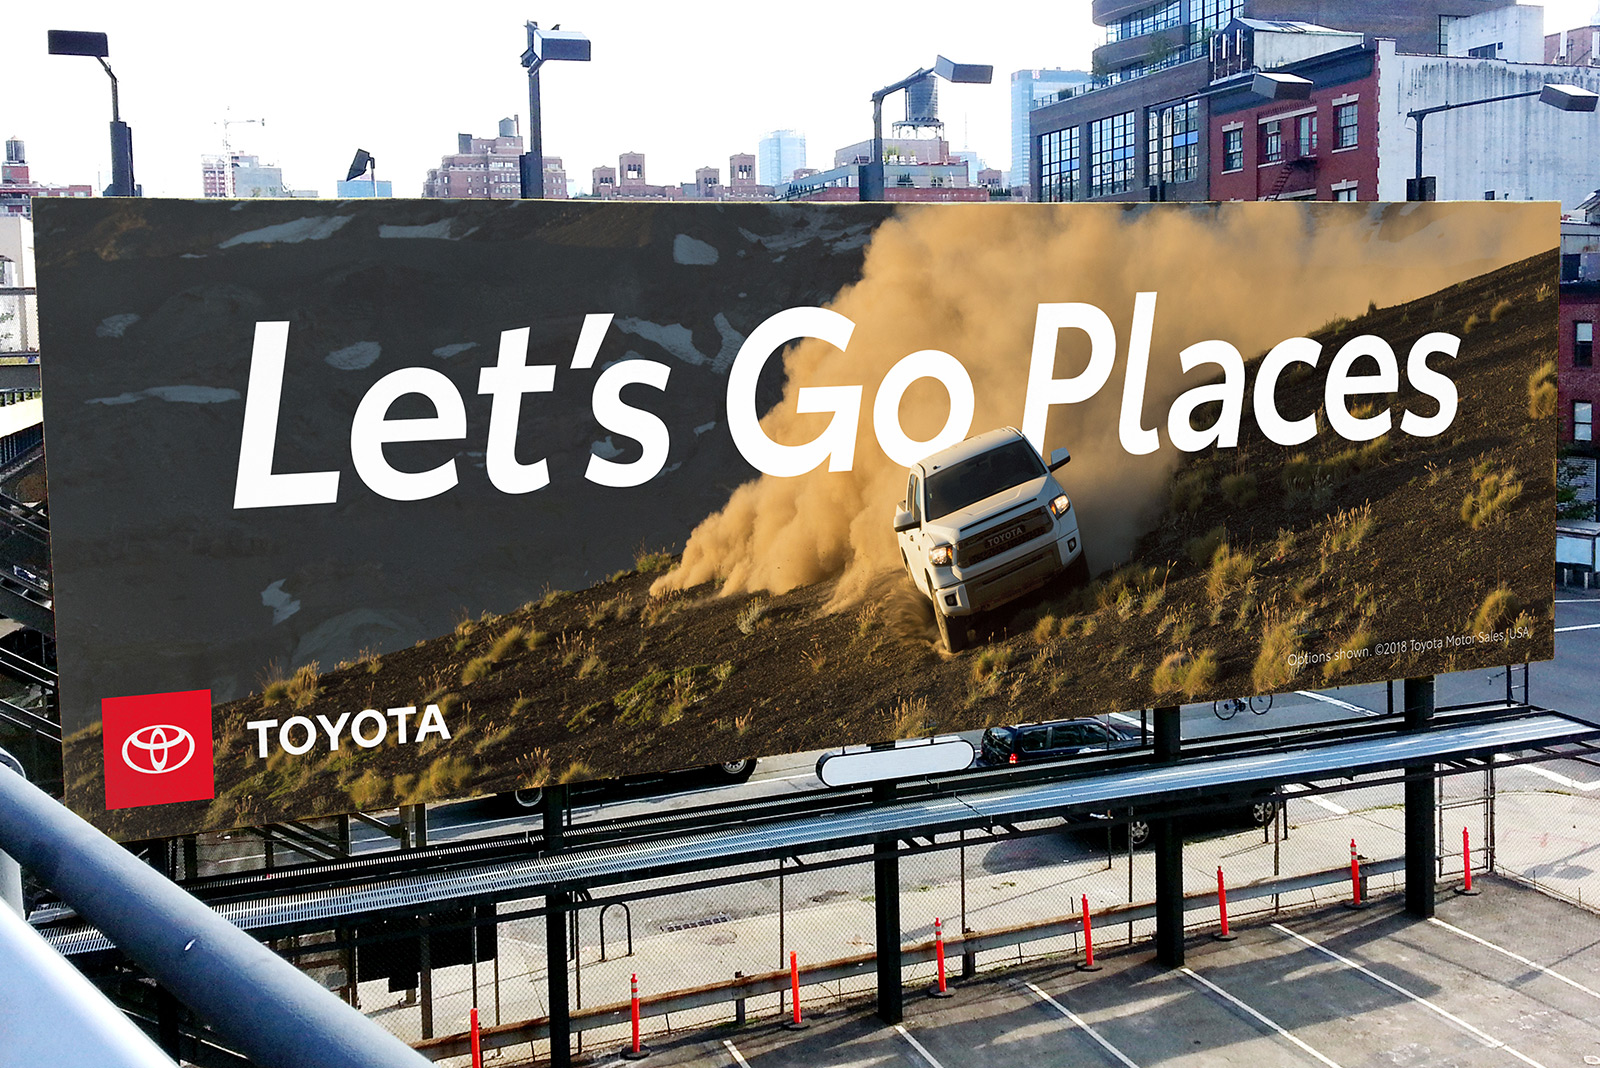 Toyota – Let's go places, Quelle: Toyota USA